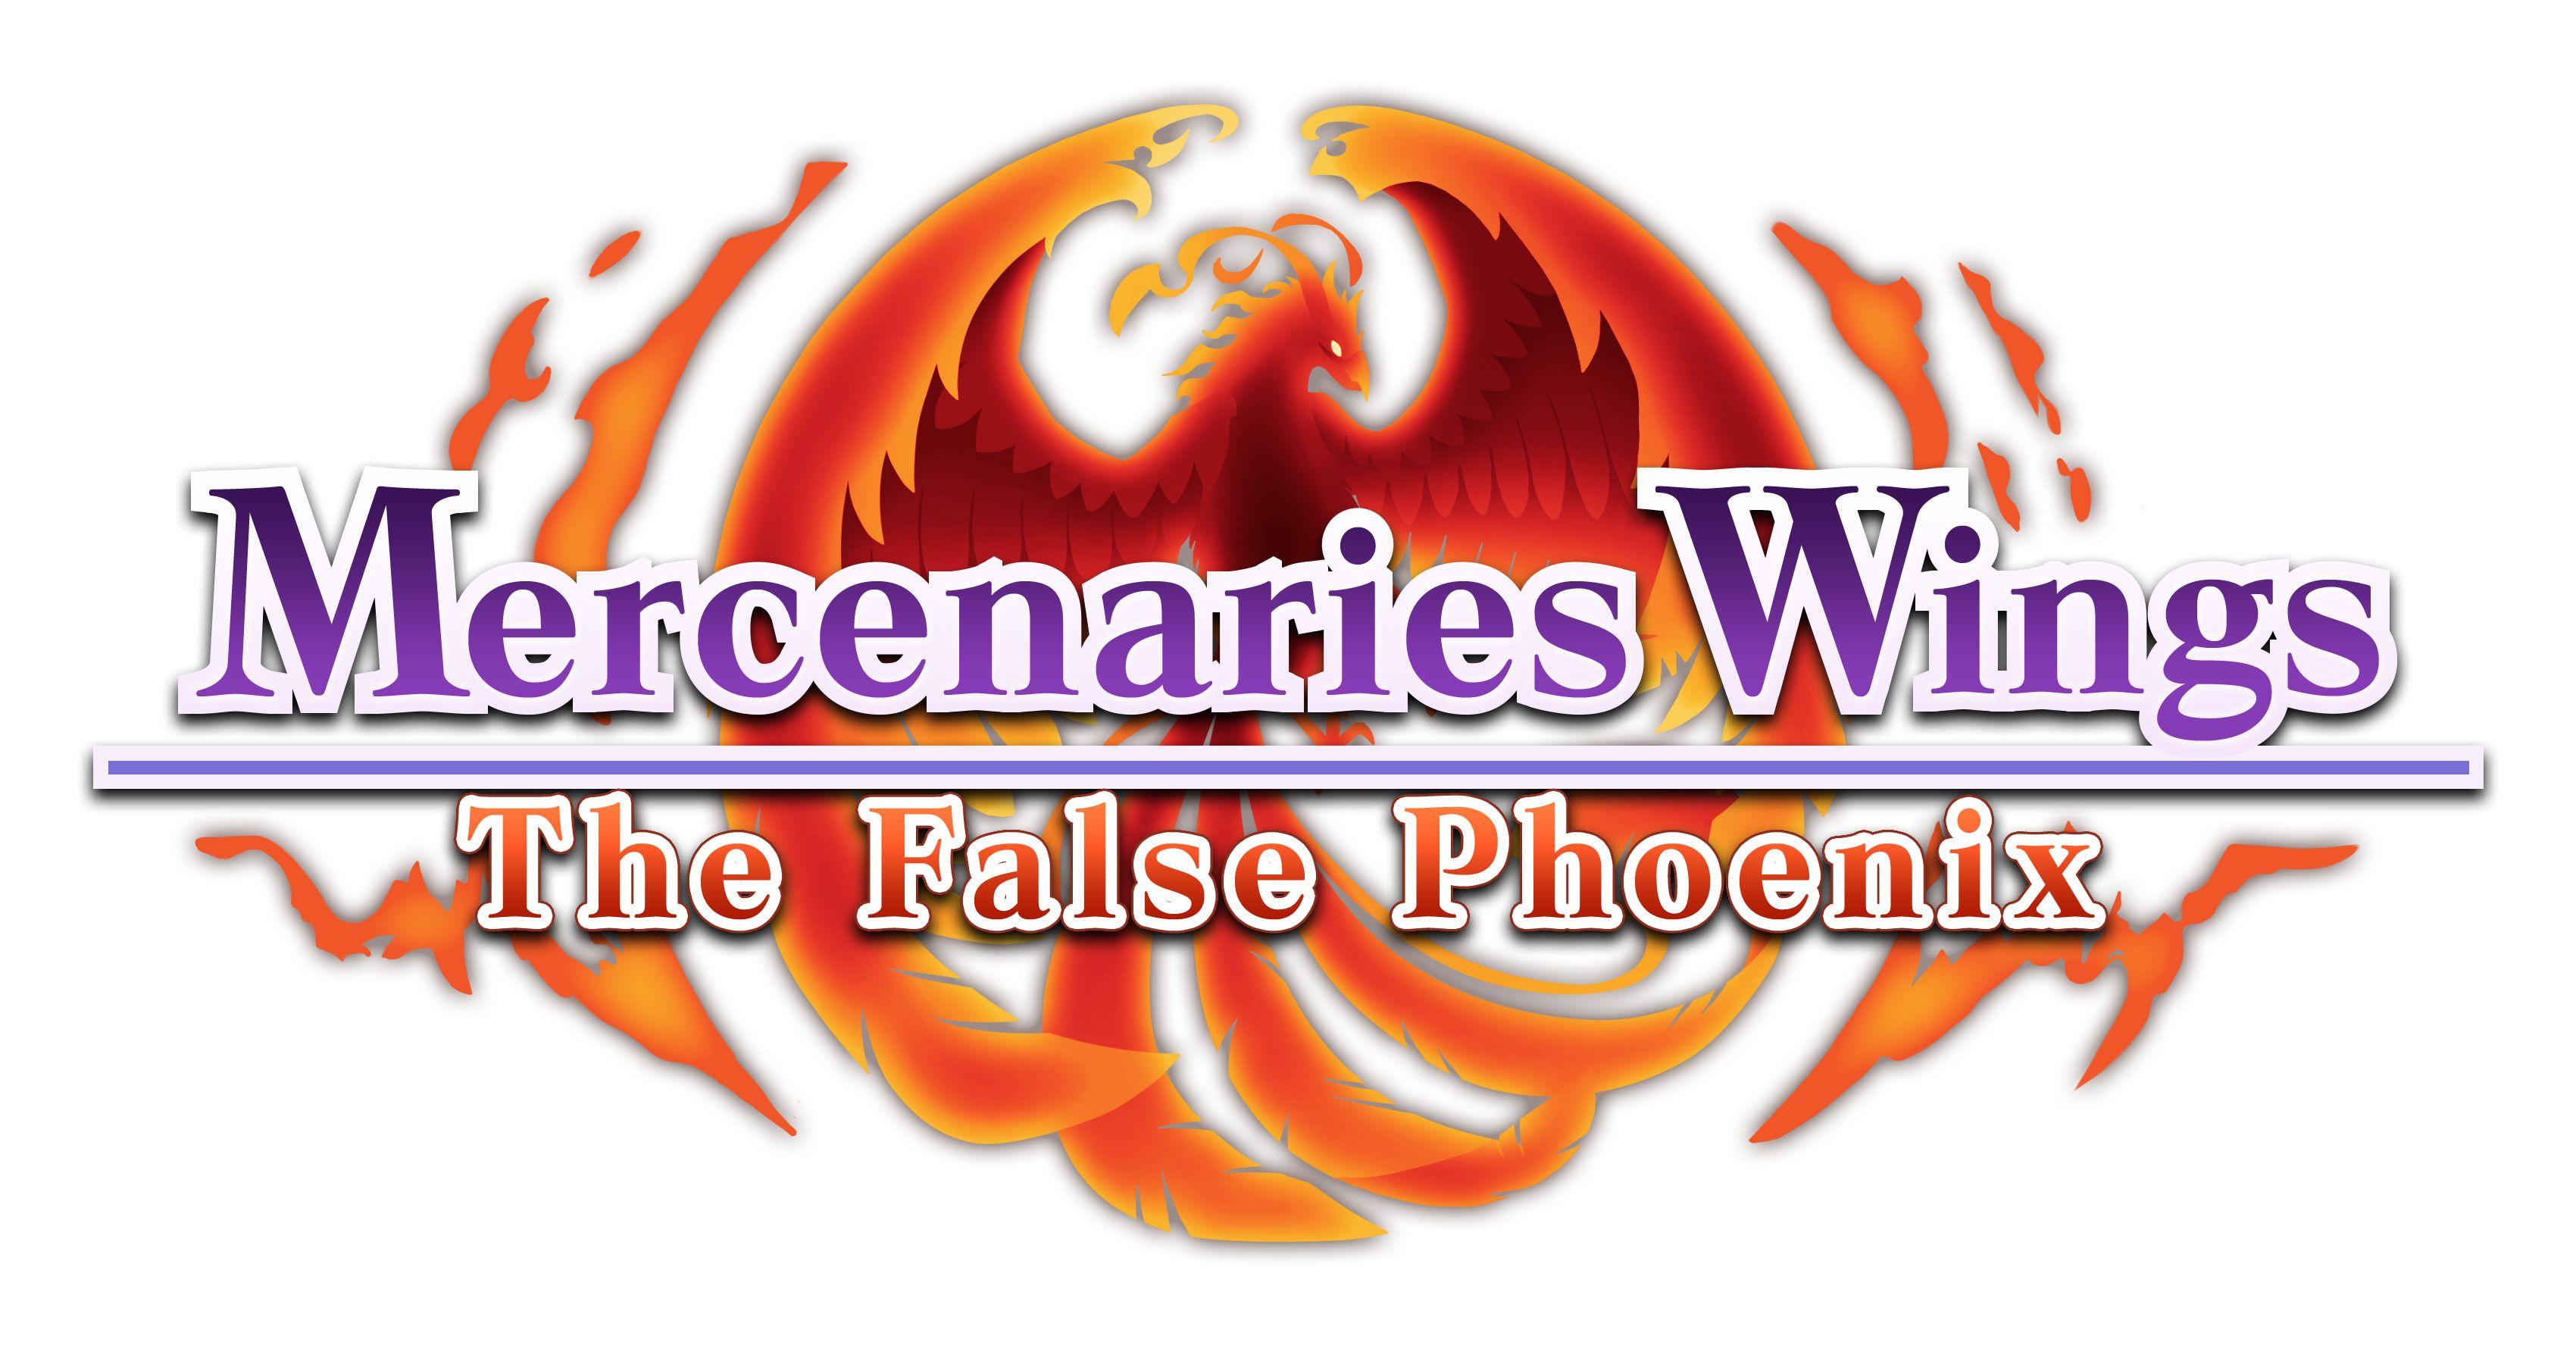 Red Circle Entertainment Logo - PR Entertainment announces Mercenaries Wings: The False